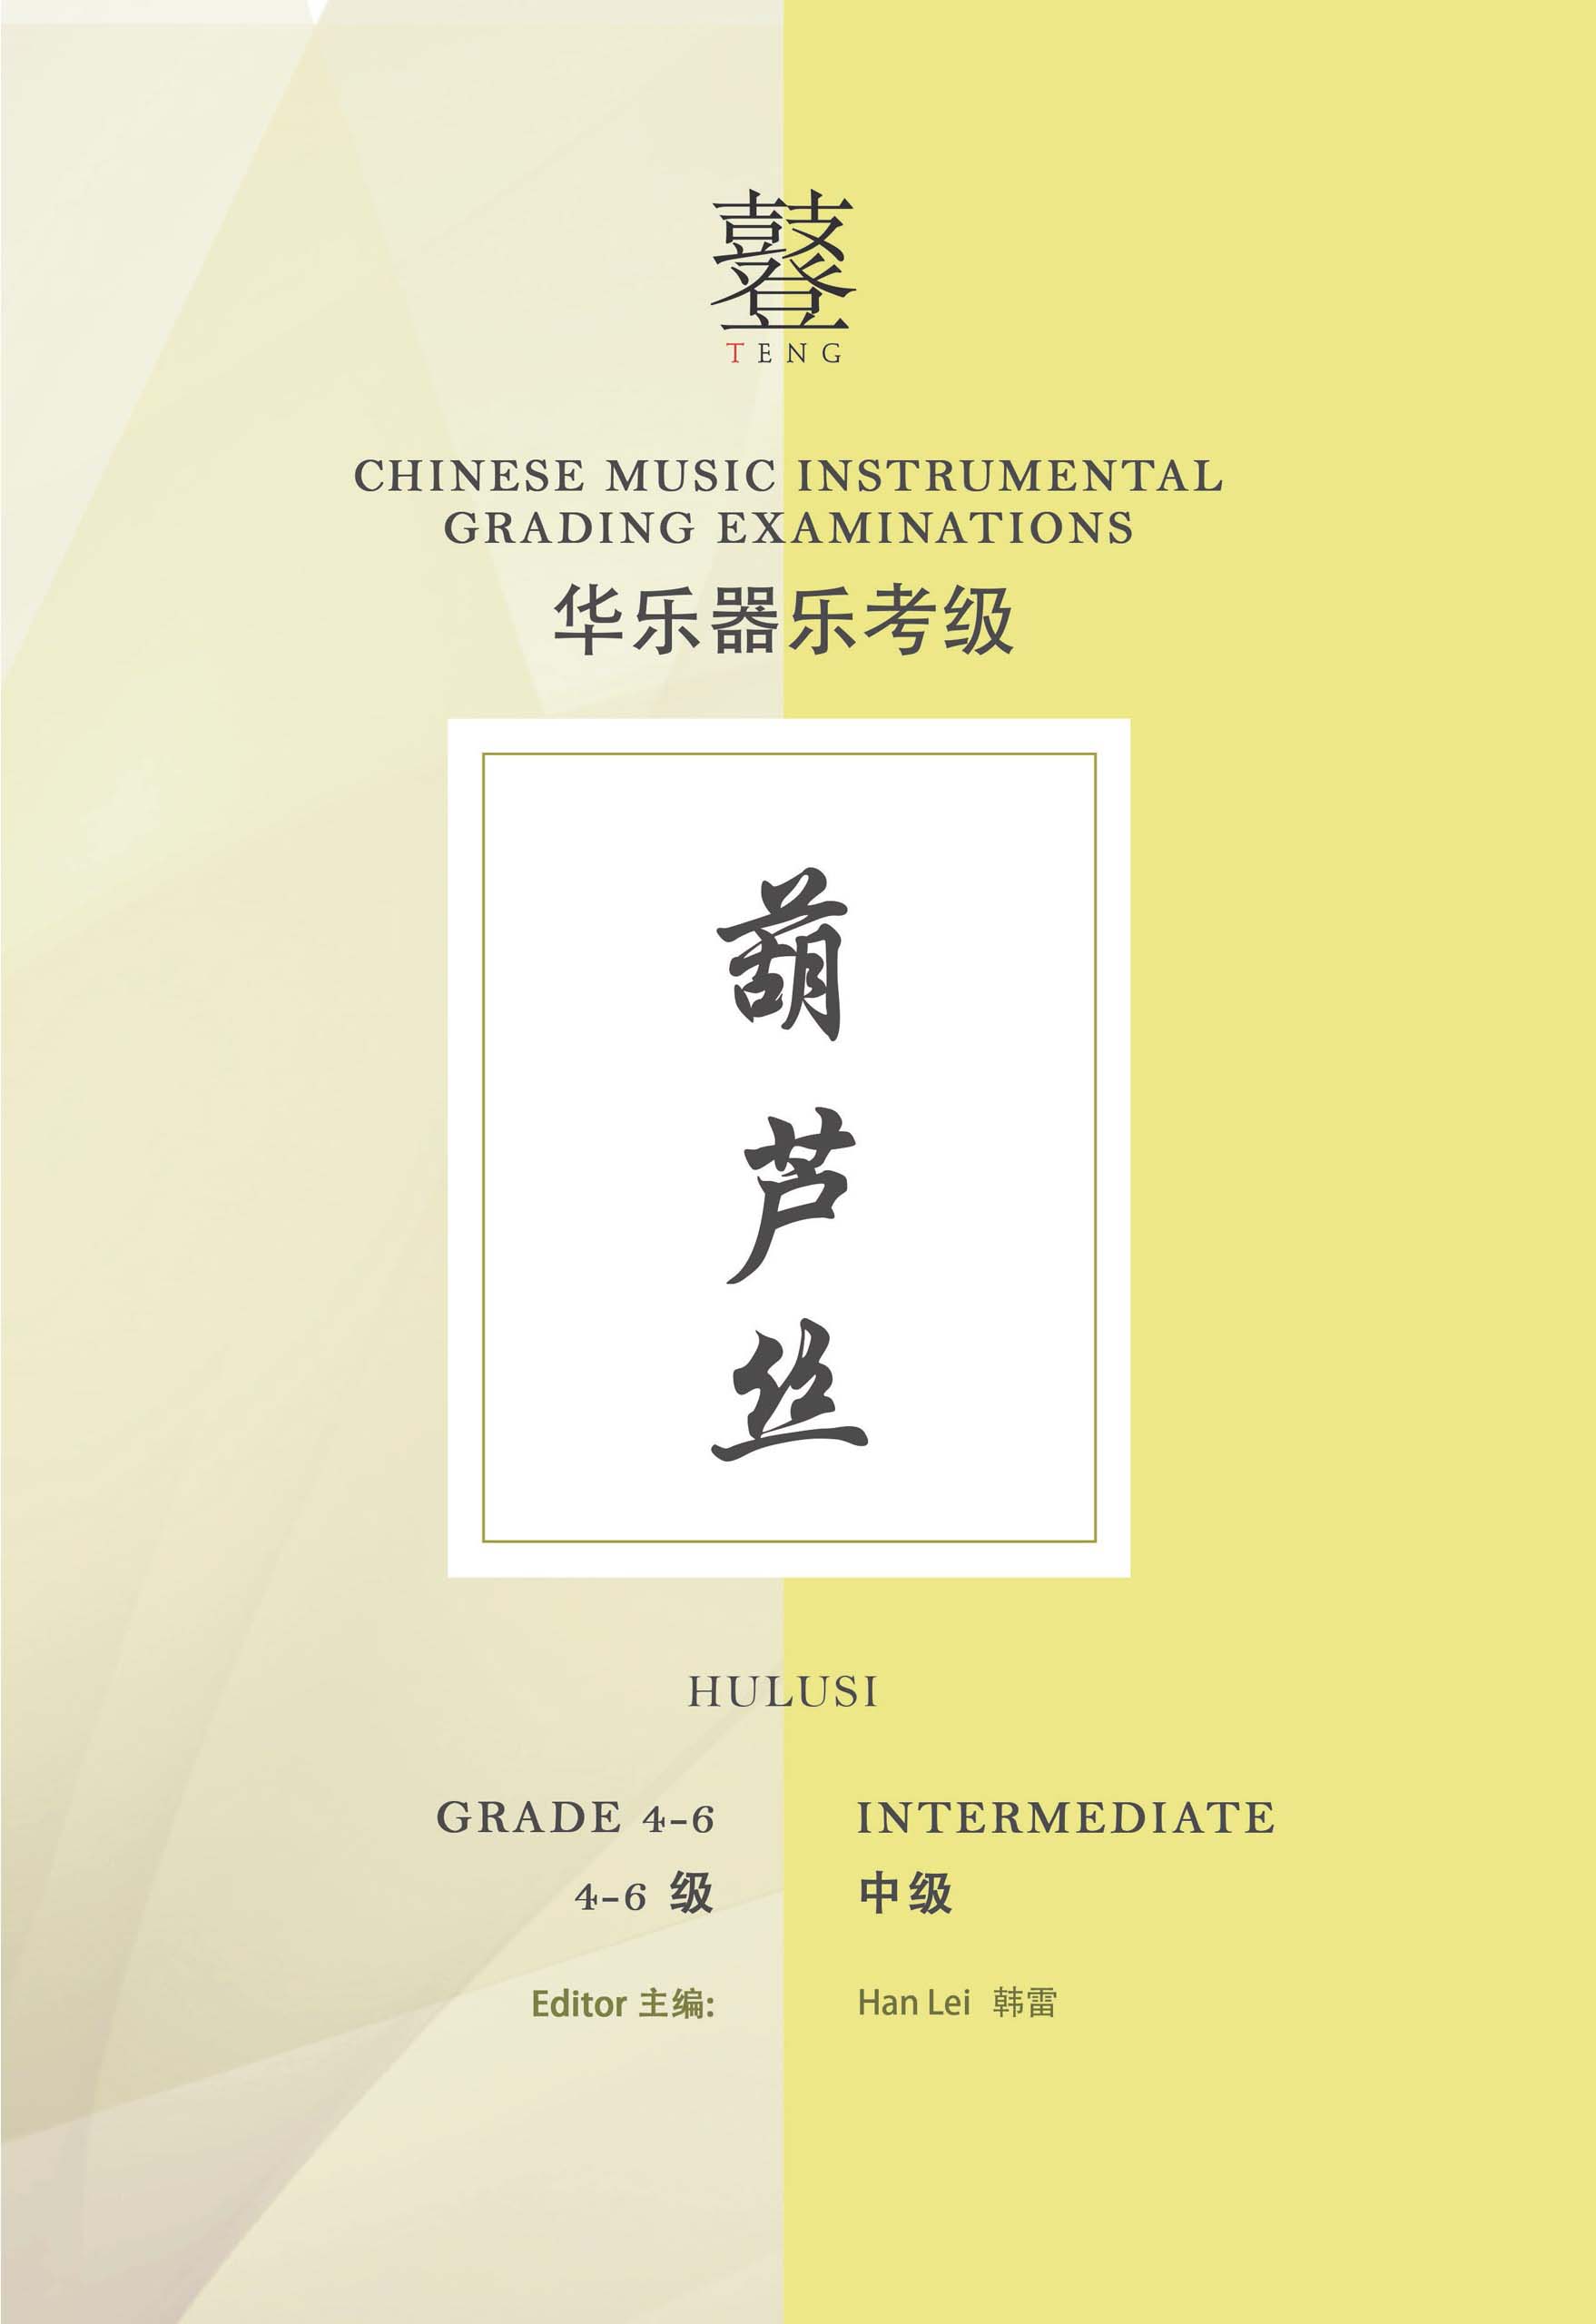 Hulusi Grading Examination Book by Teng (Intermediate Grade 4-6) featured photo